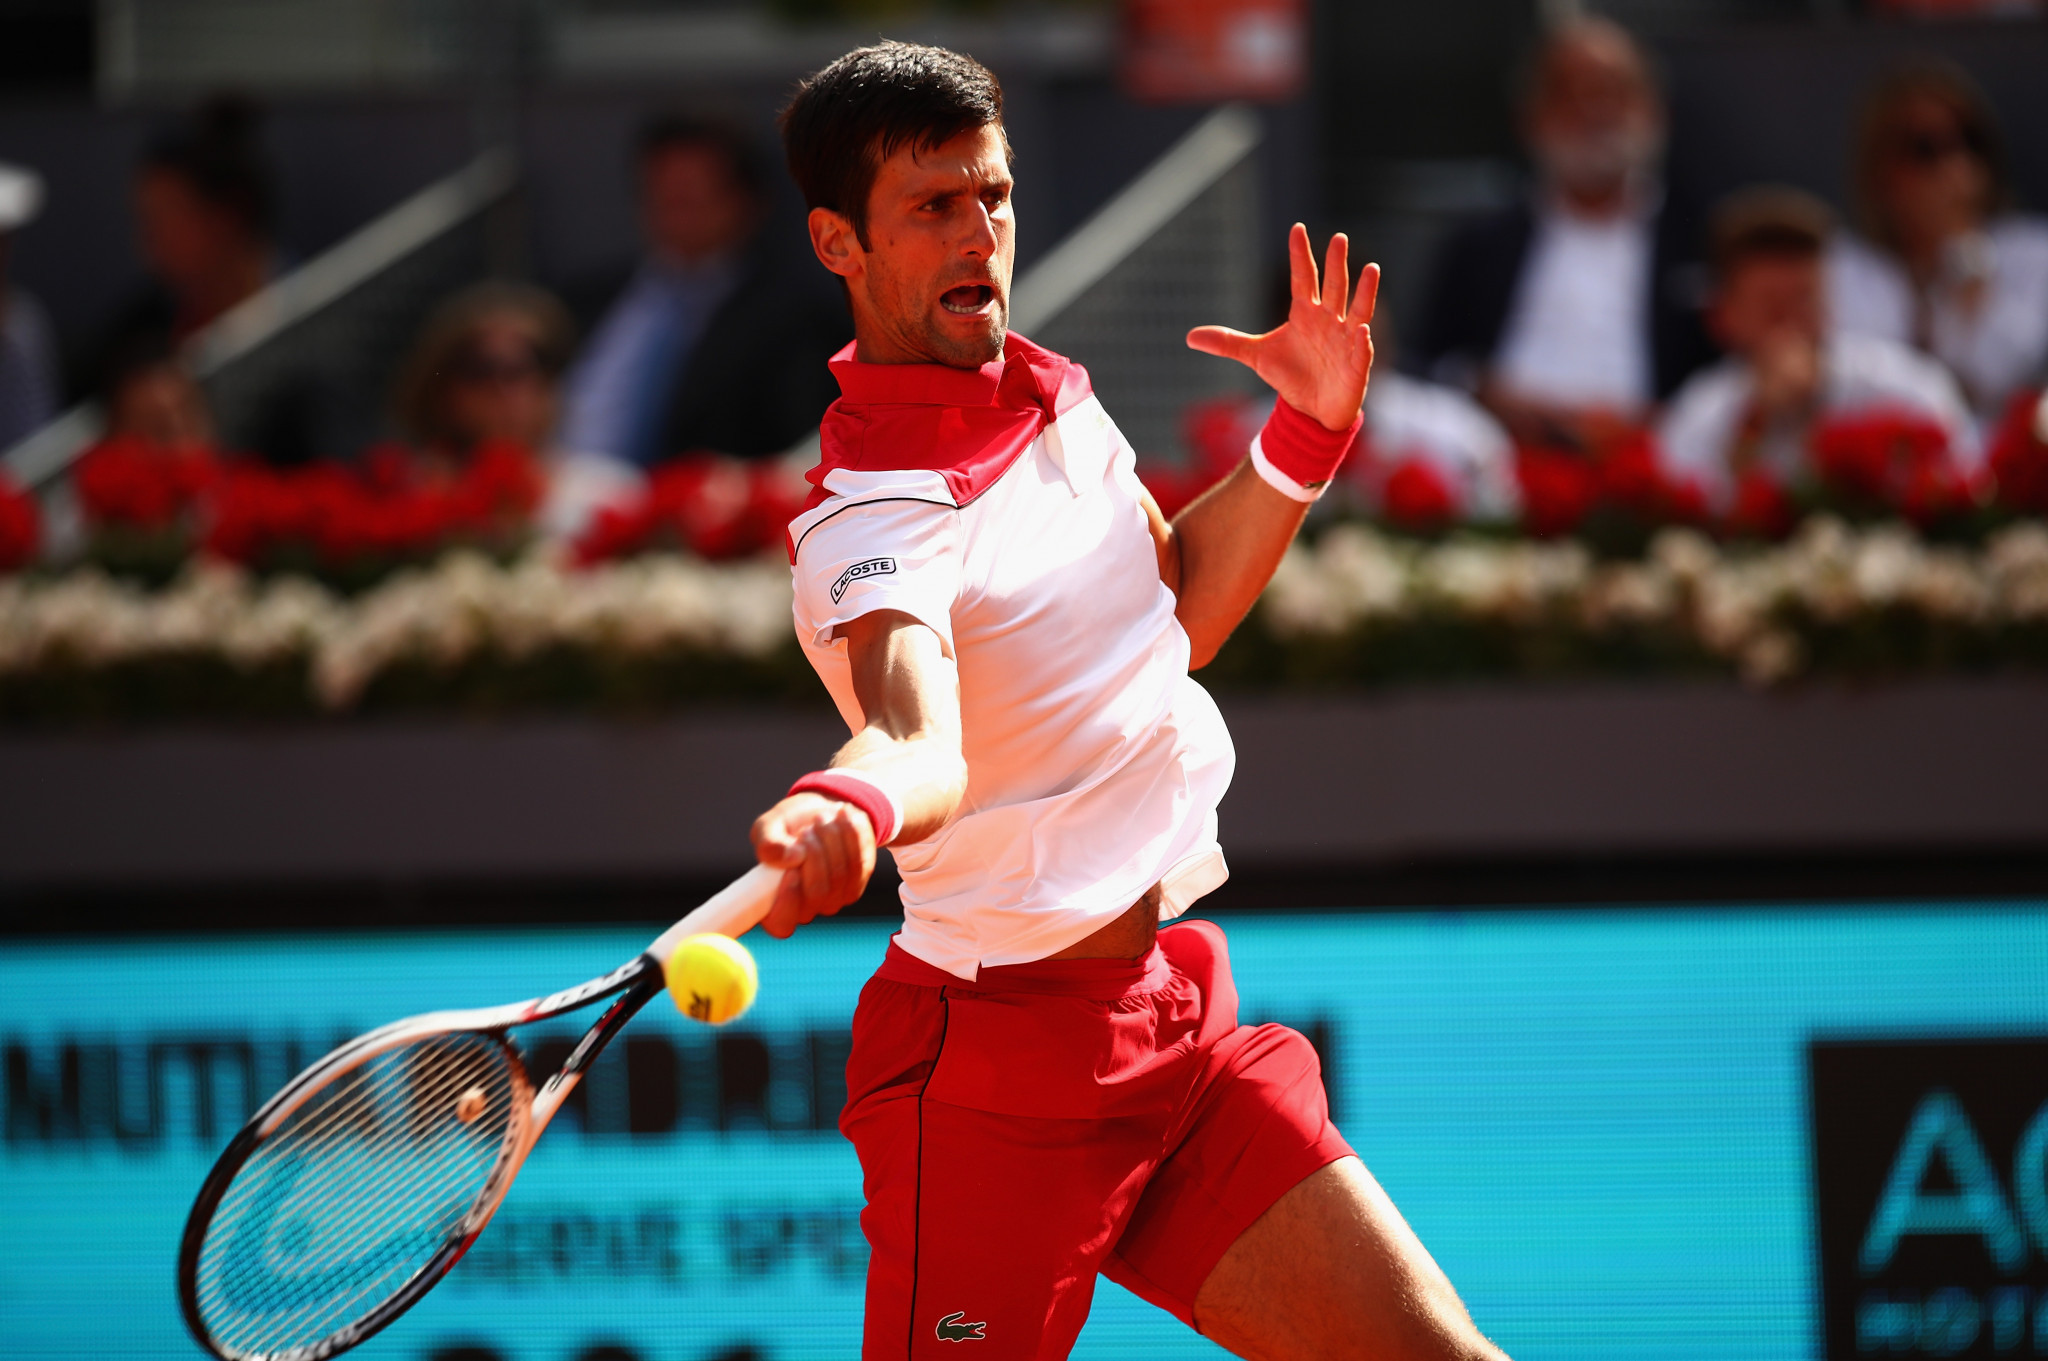 Djokovic rediscovers form with victory over Nishikori at Mutua Madrid Open